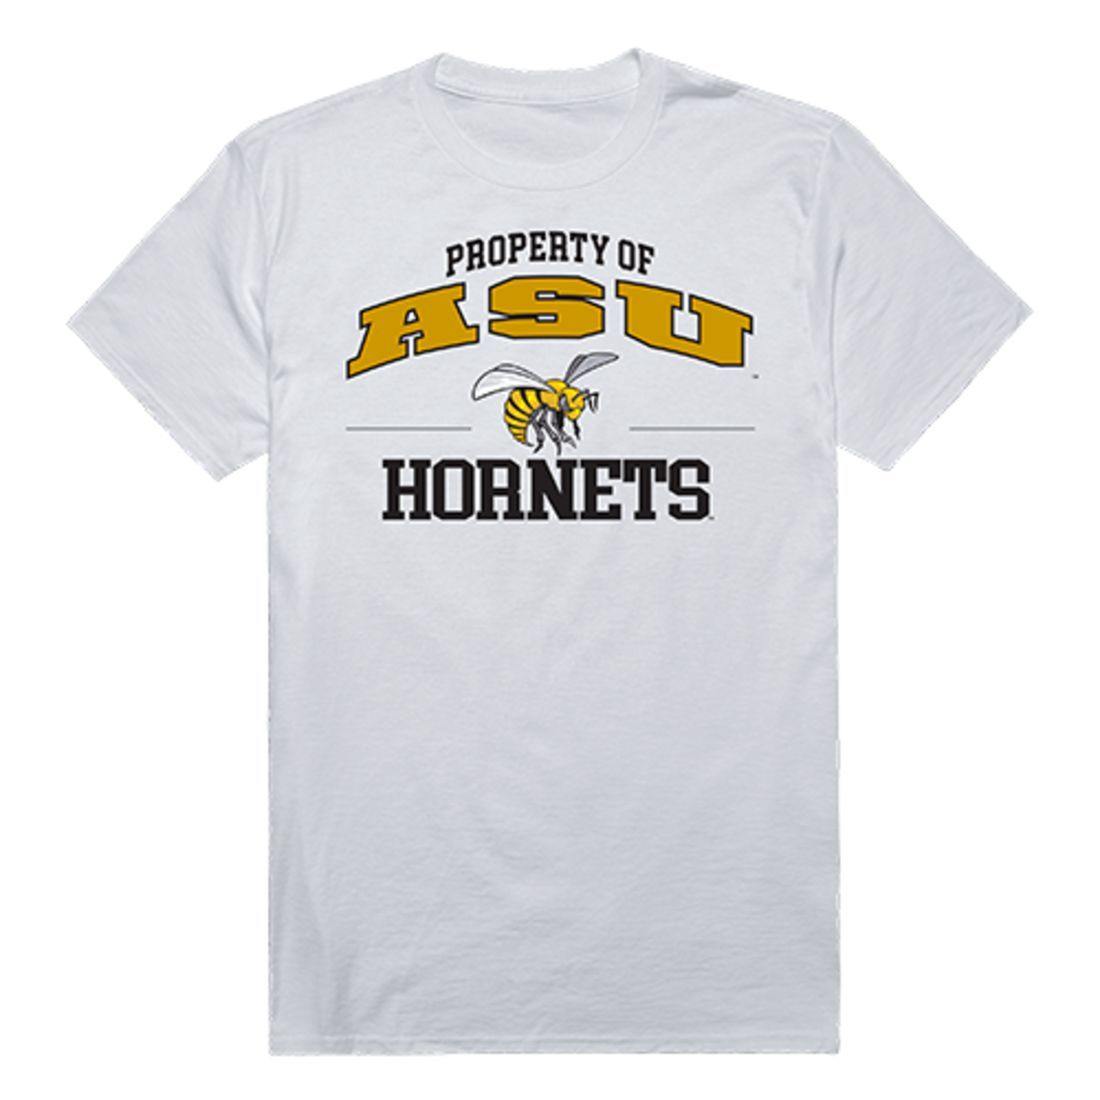 ASU Alabama State University Hornets Property T-Shirt White-Campus-Wardrobe